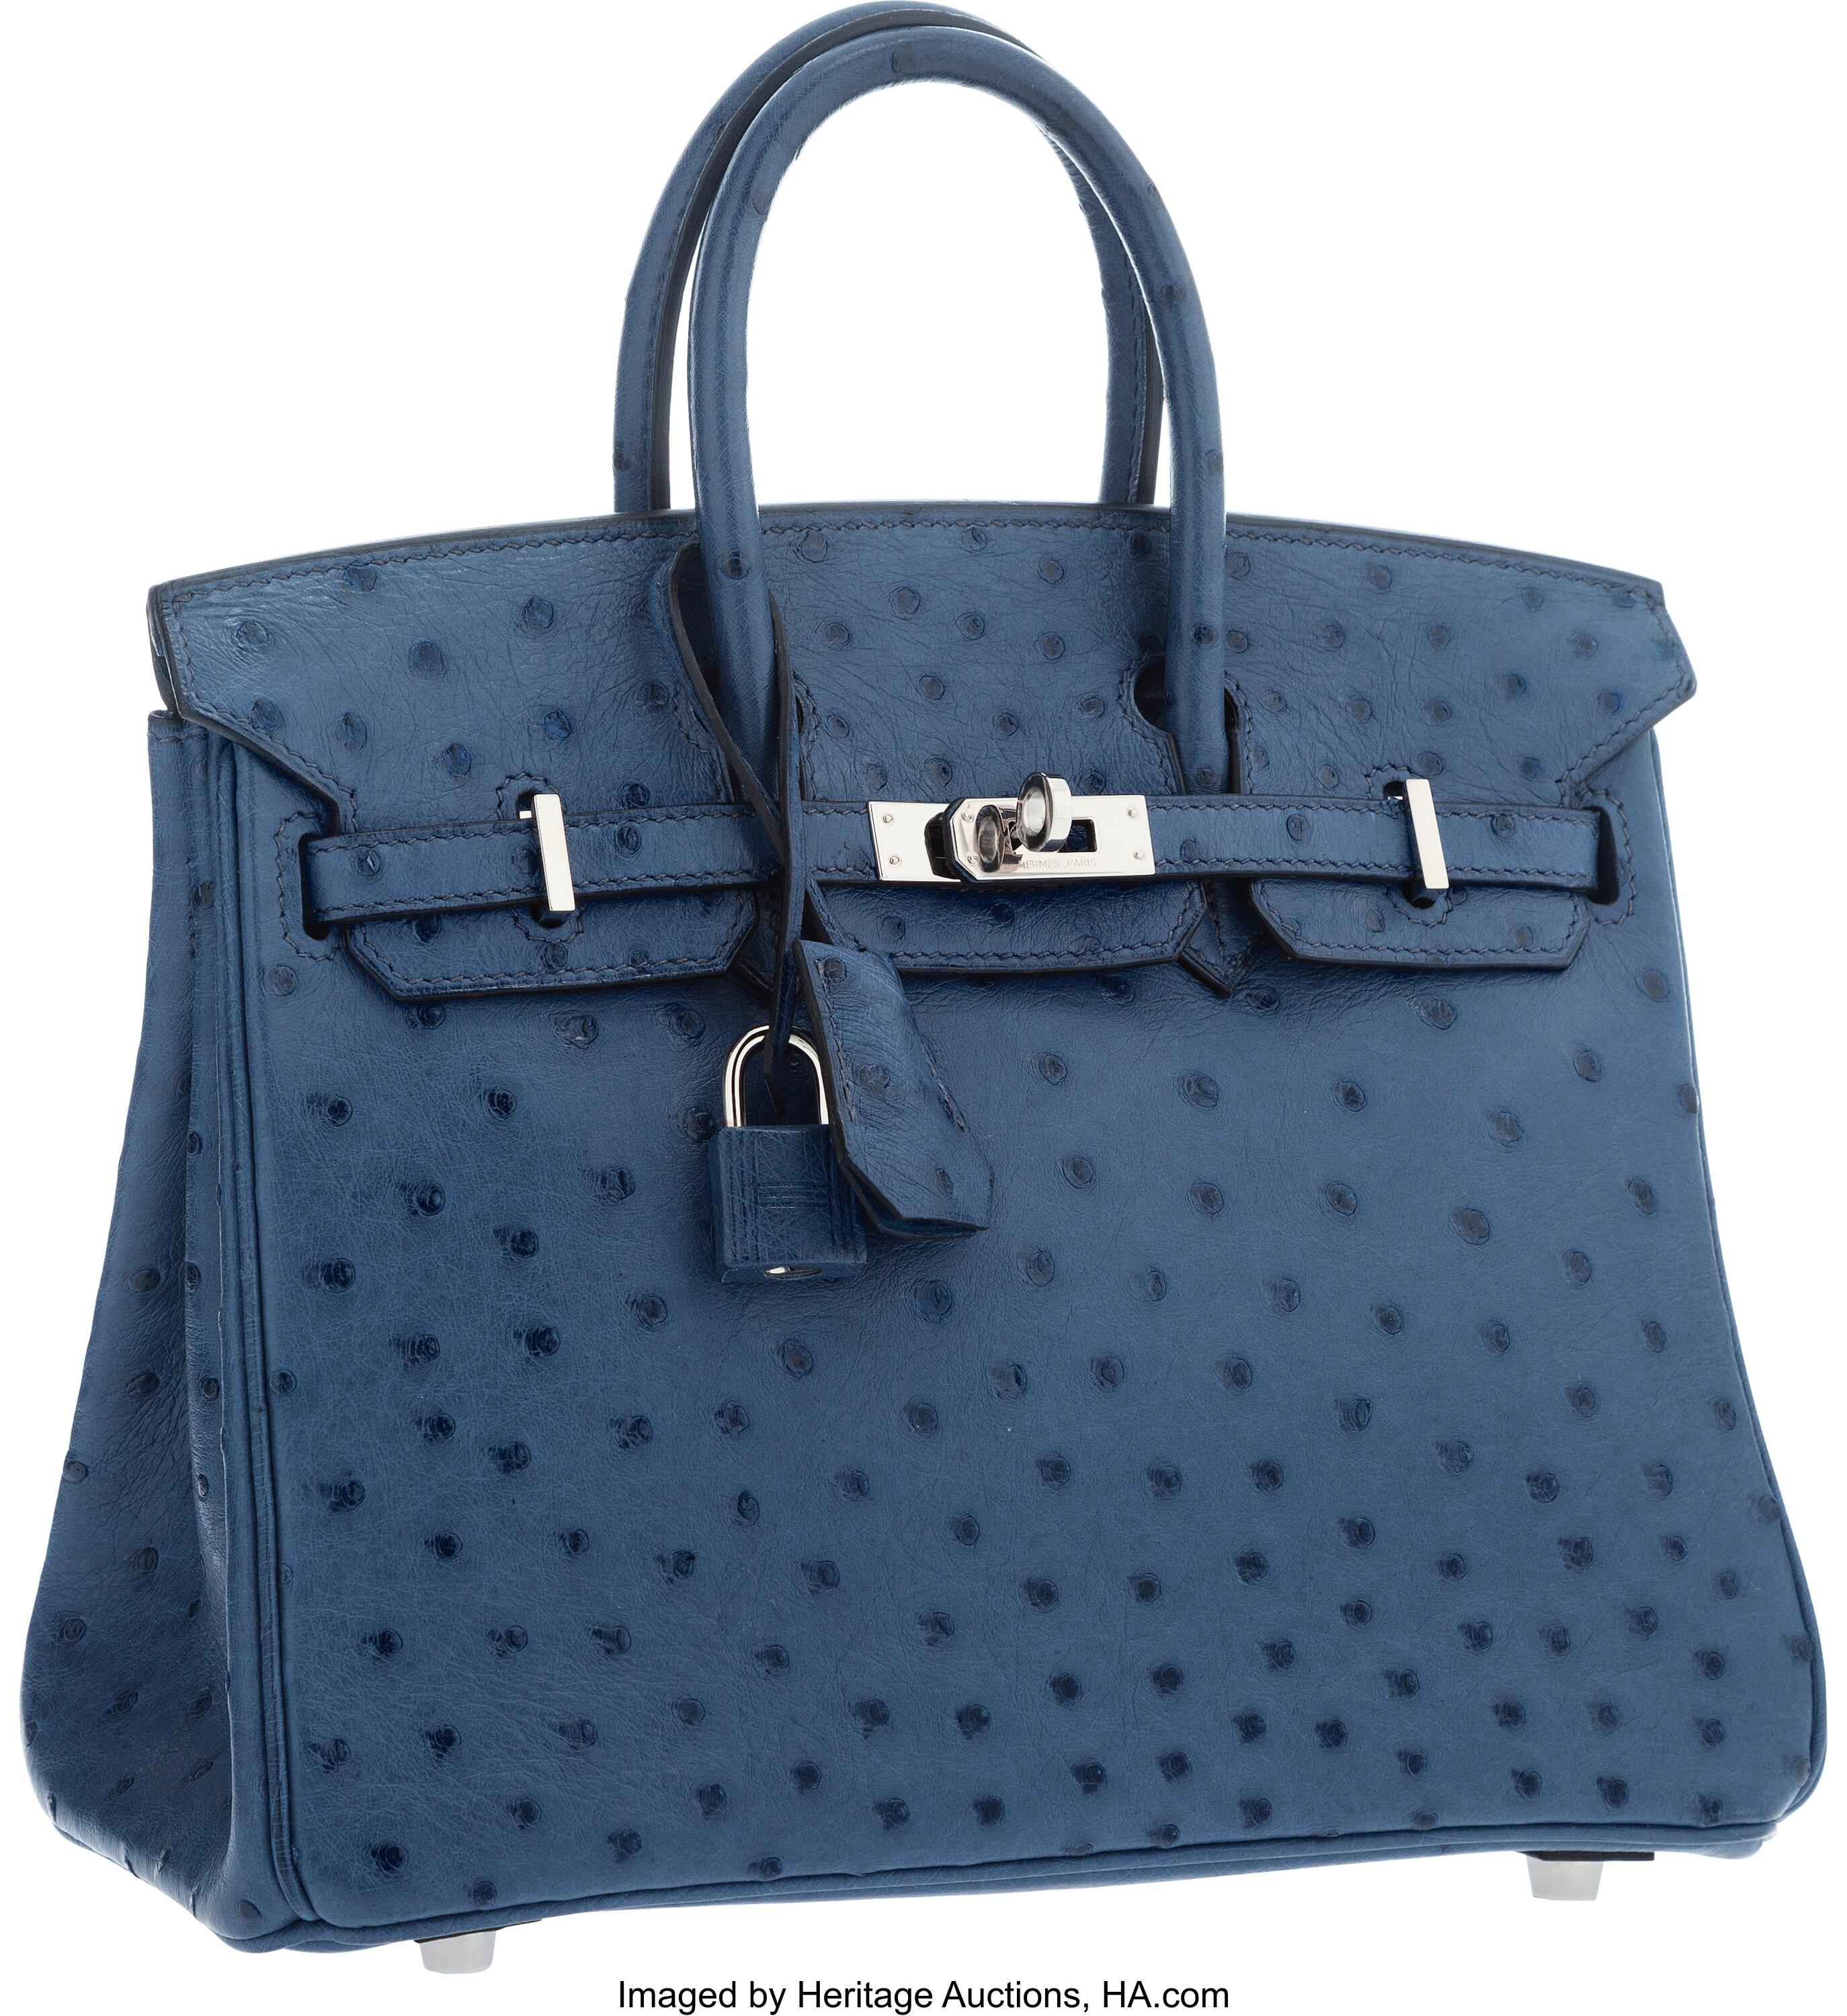 Hermes 25cm Blue Roi Ostrich Birkin Bag with Palladium, Lot #58030, Heritage Auctions